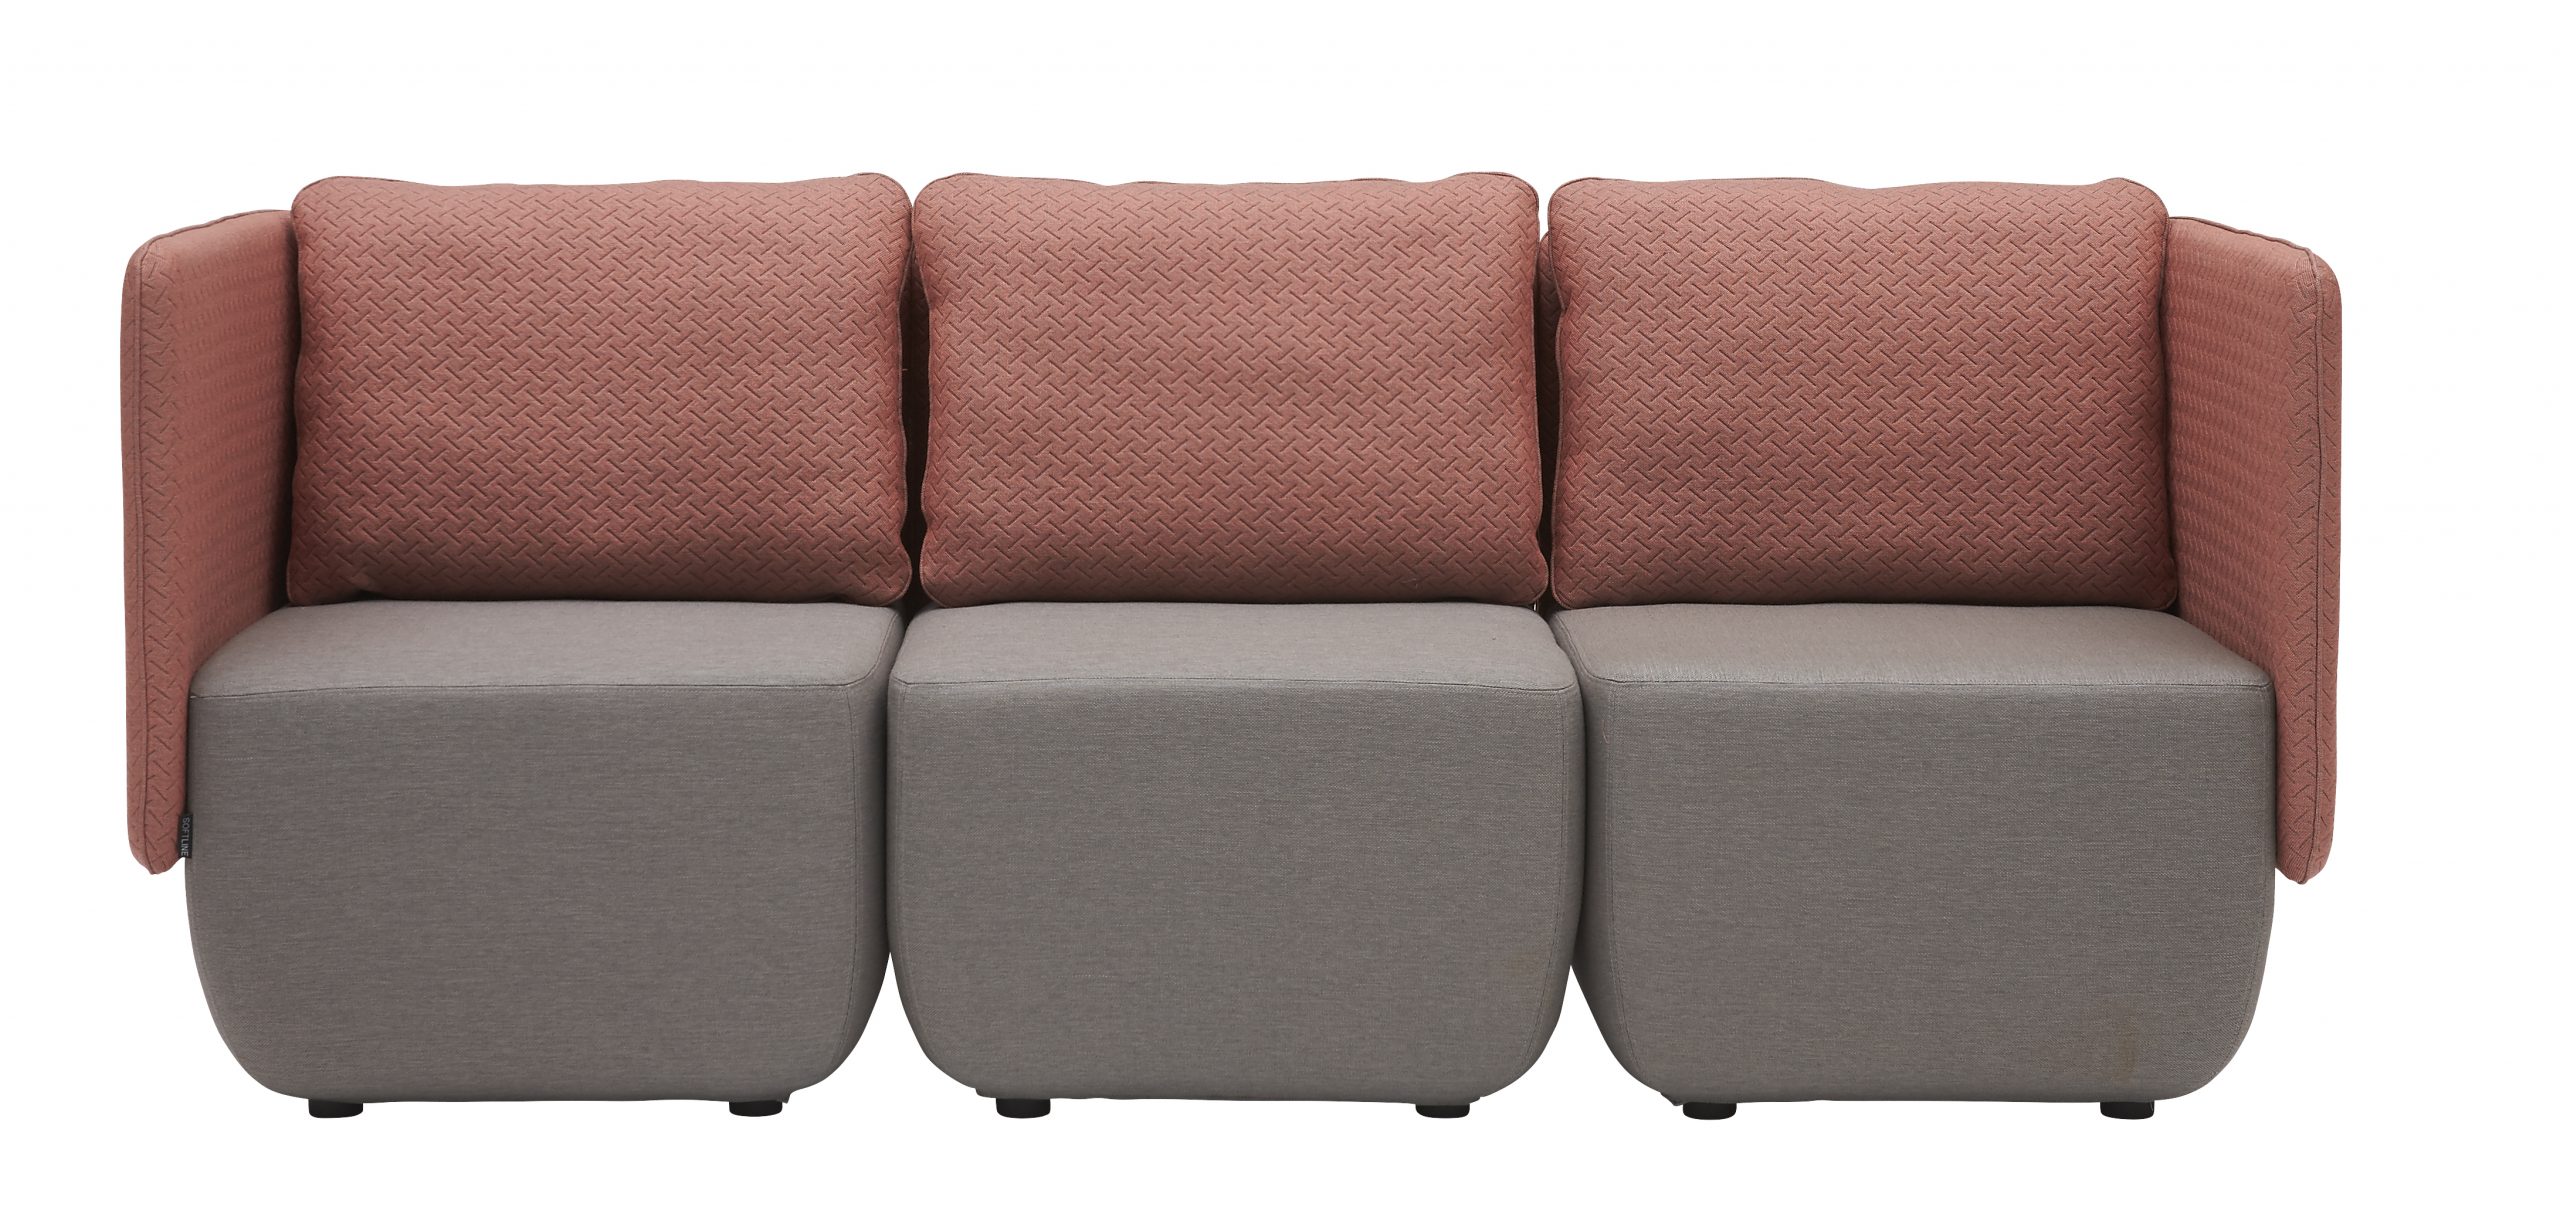 opera-modular-sofa-high-res-29-scaled.jpg